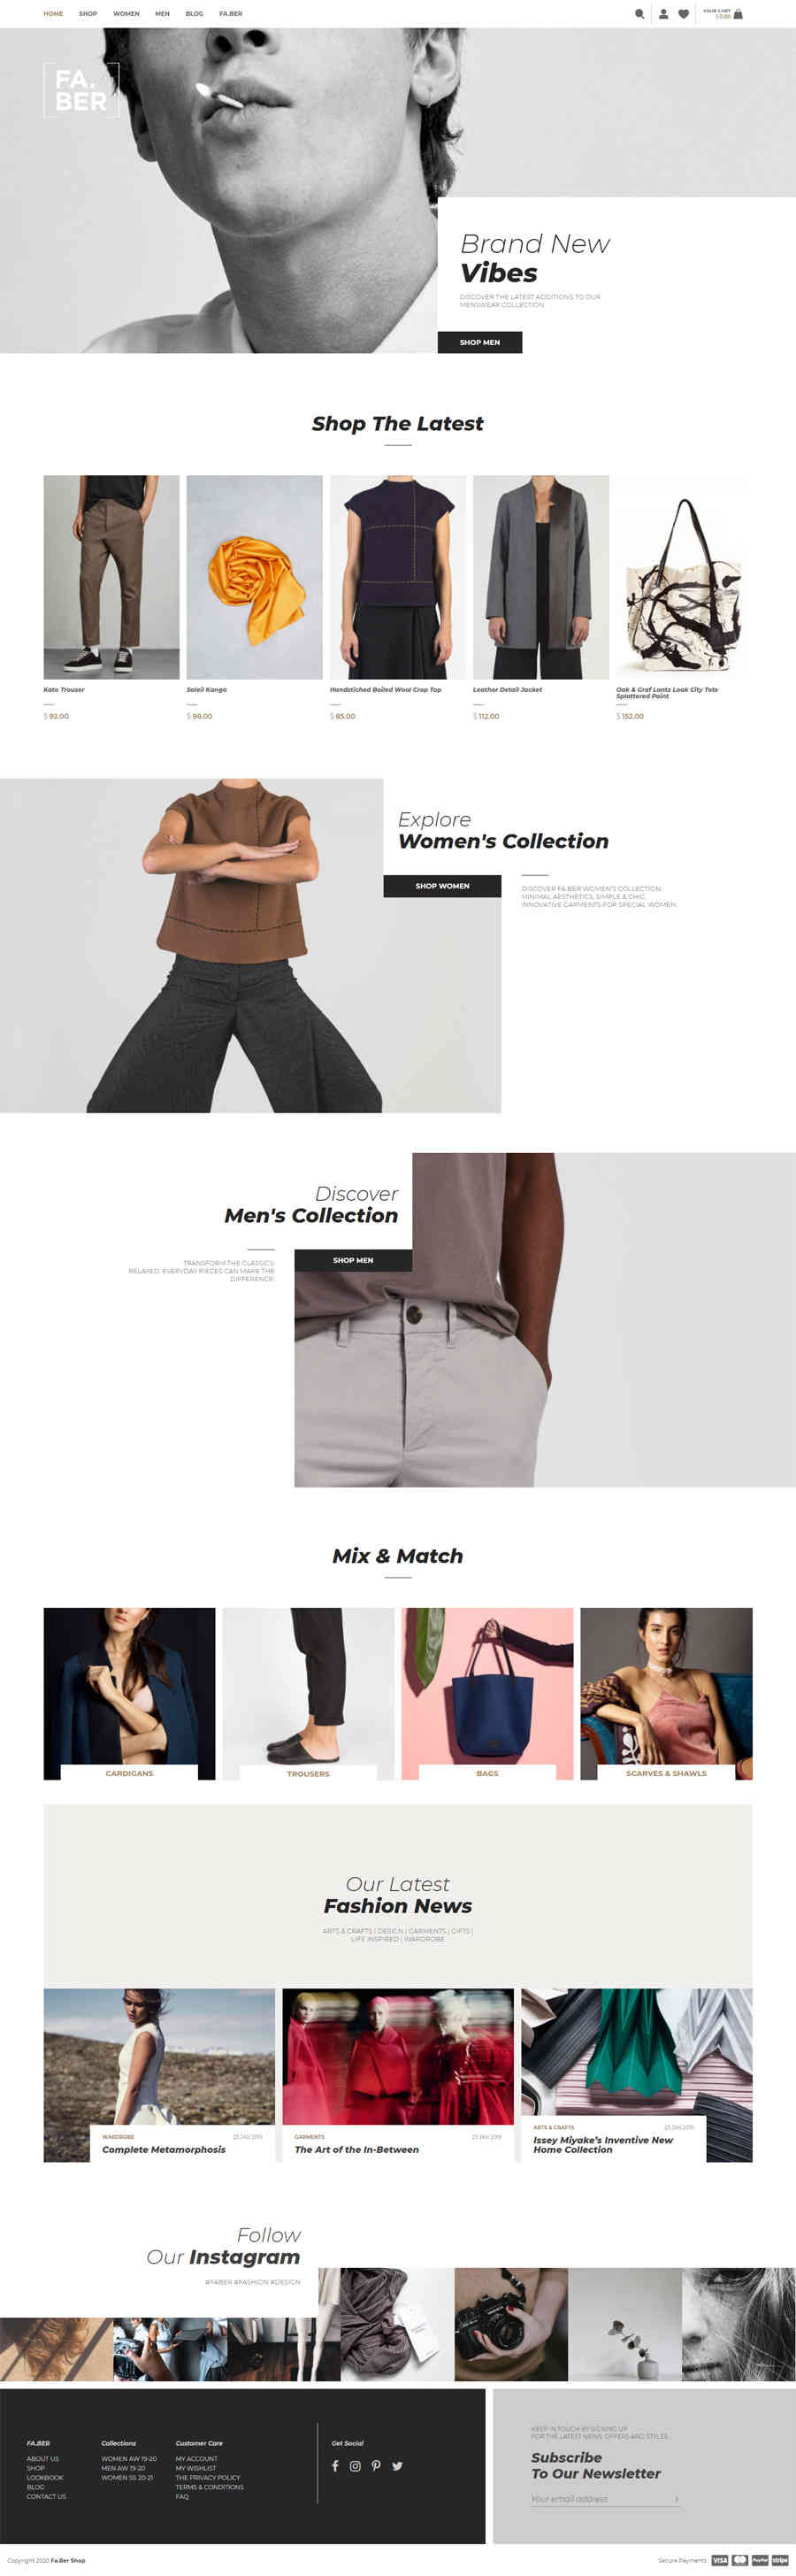 thiet ke website tmi fashion shop 4050